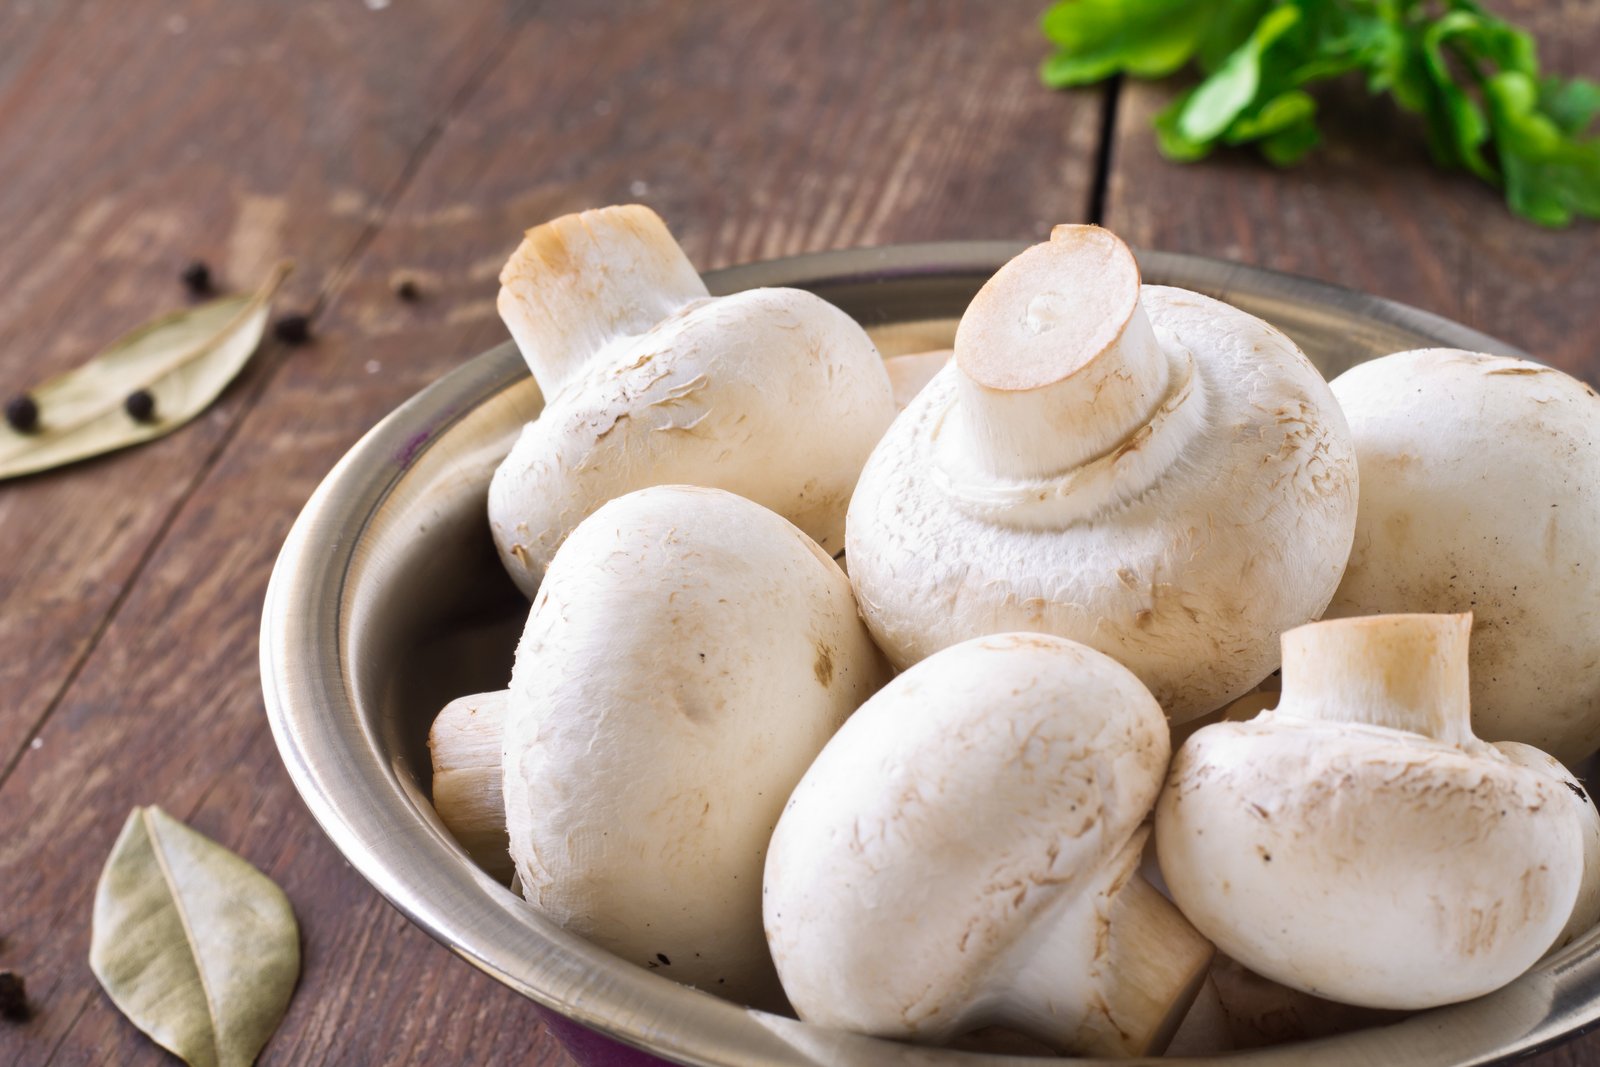 How To Store White Mushrooms